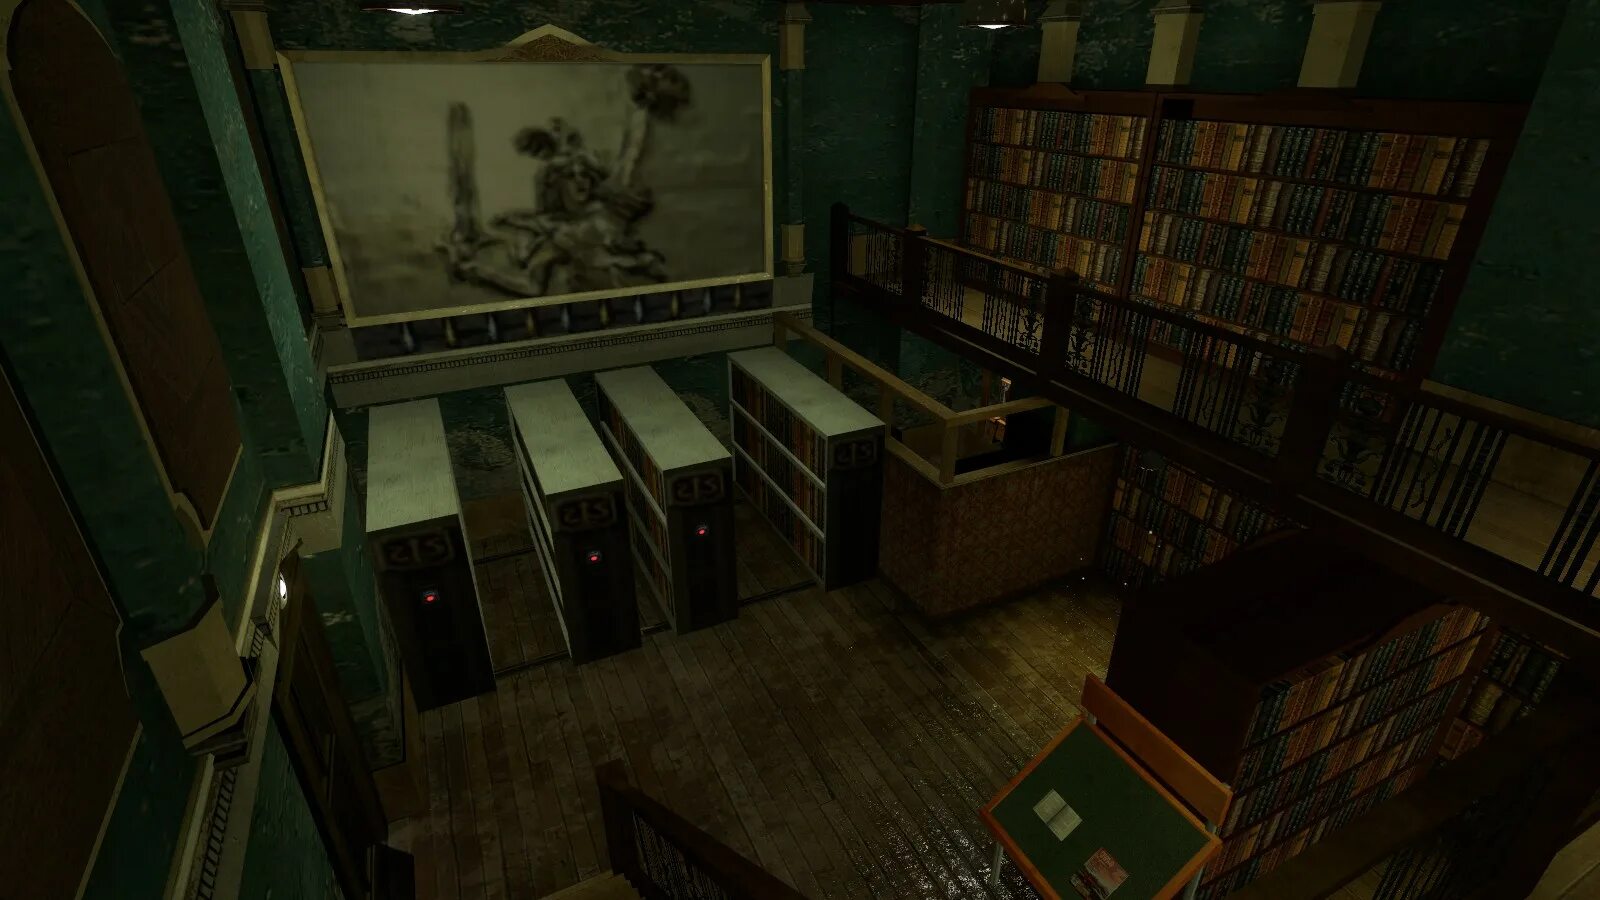 Resident Evil 2 Library. Resident Evil 2 Remake Library. Resident Evil 2 комната управления. Resident Evil 2 1998 библиотека.